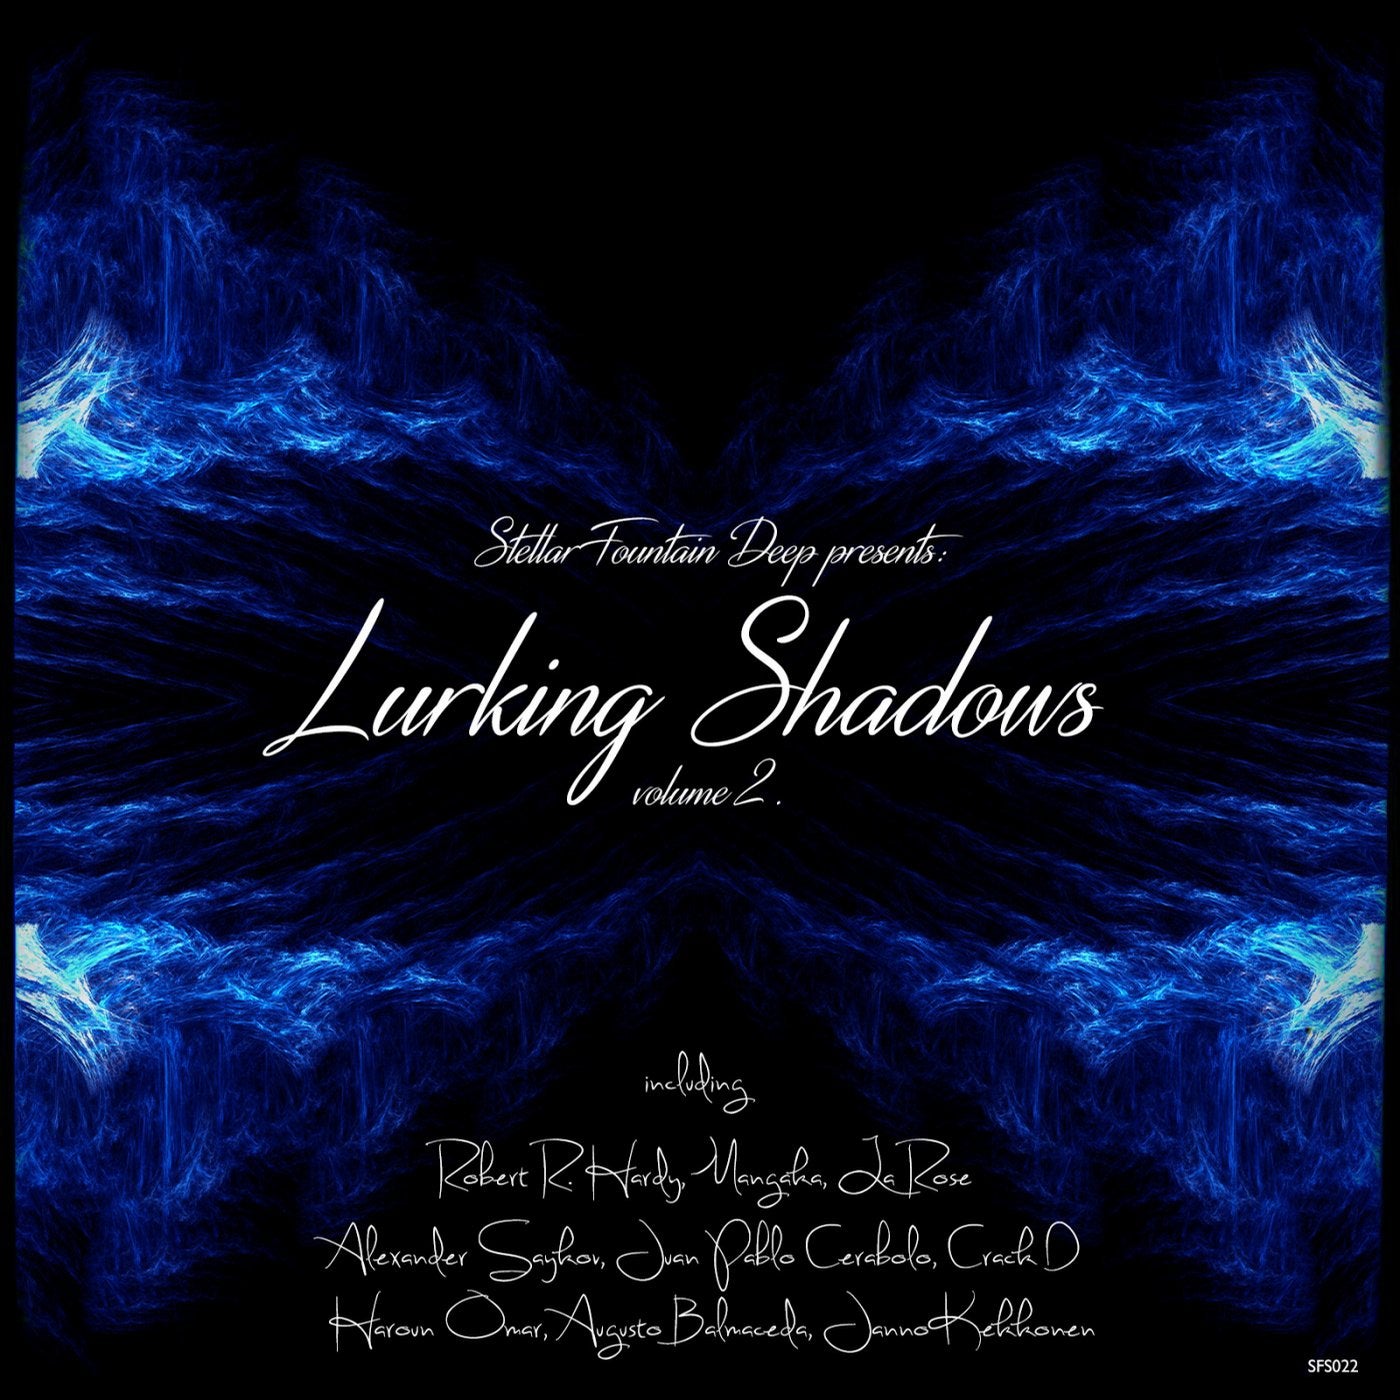 Lurking Shadows Volume II.